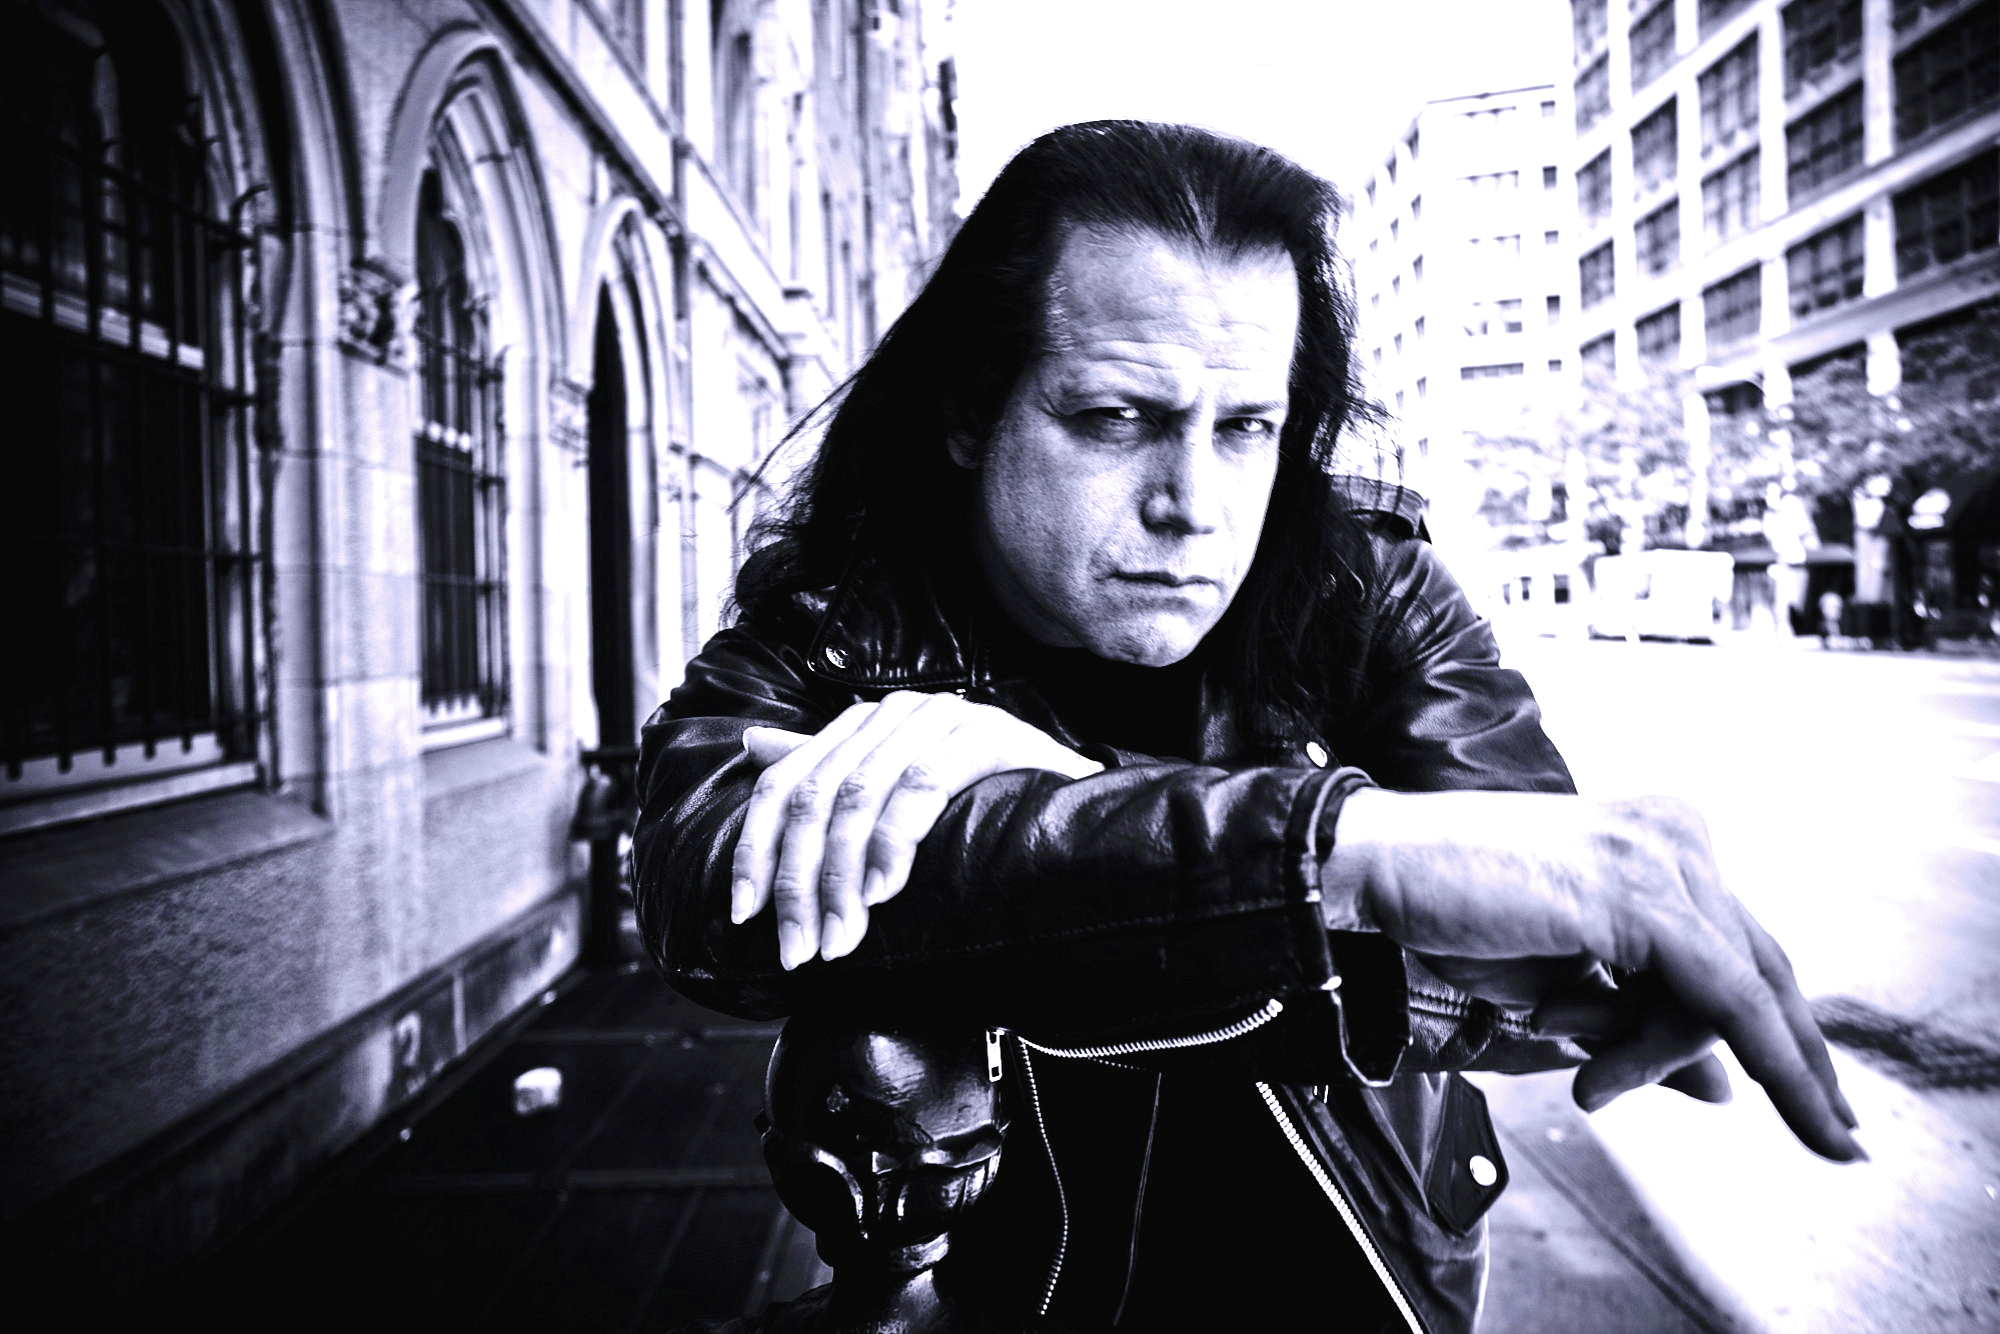 Danzig Announces Special Anniversary Tour